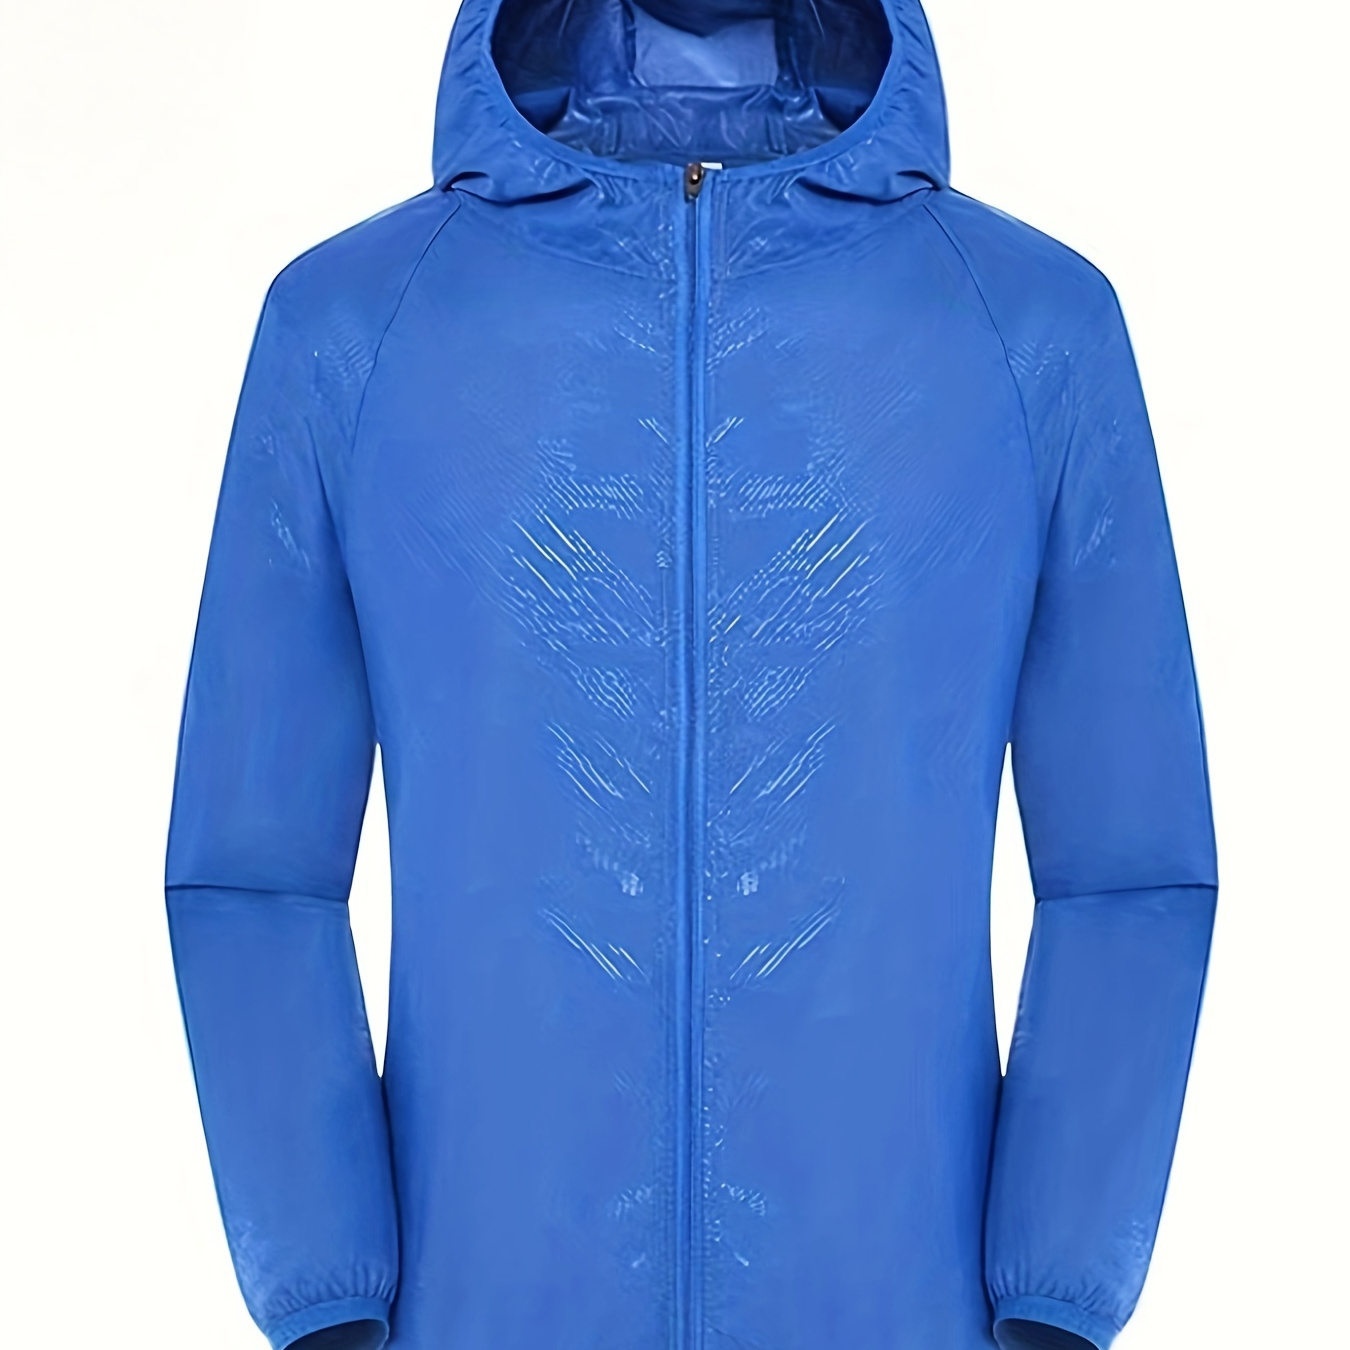 

Men's Casual Lightweight Waterproof Windbreaker Jacket Hooded Coat Regular Fit Coat For Spring Autumn Outdoors Hiking